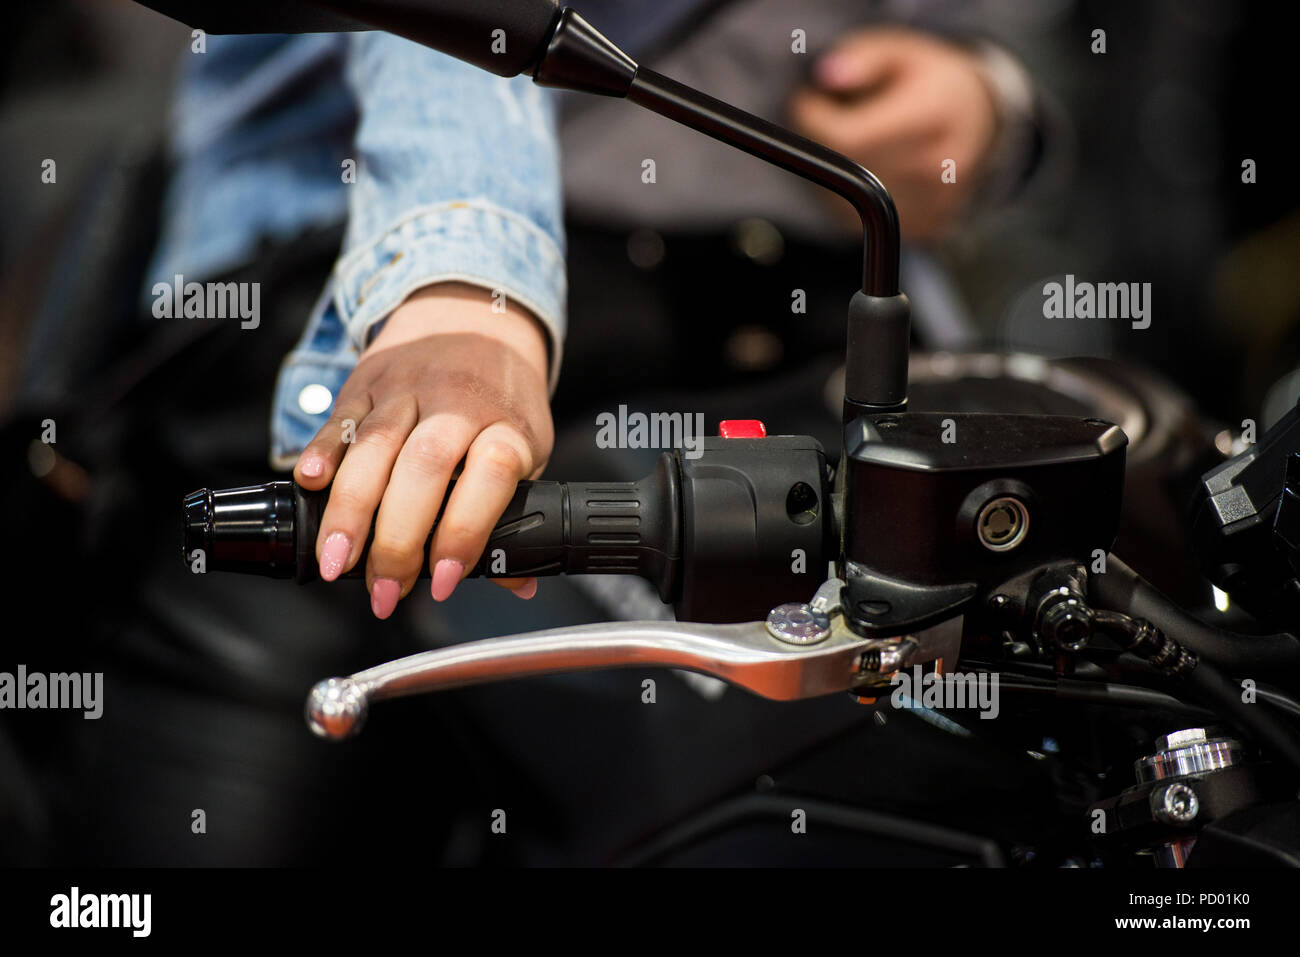 Woman's hand on a motorcycle handlebar Stock Photo